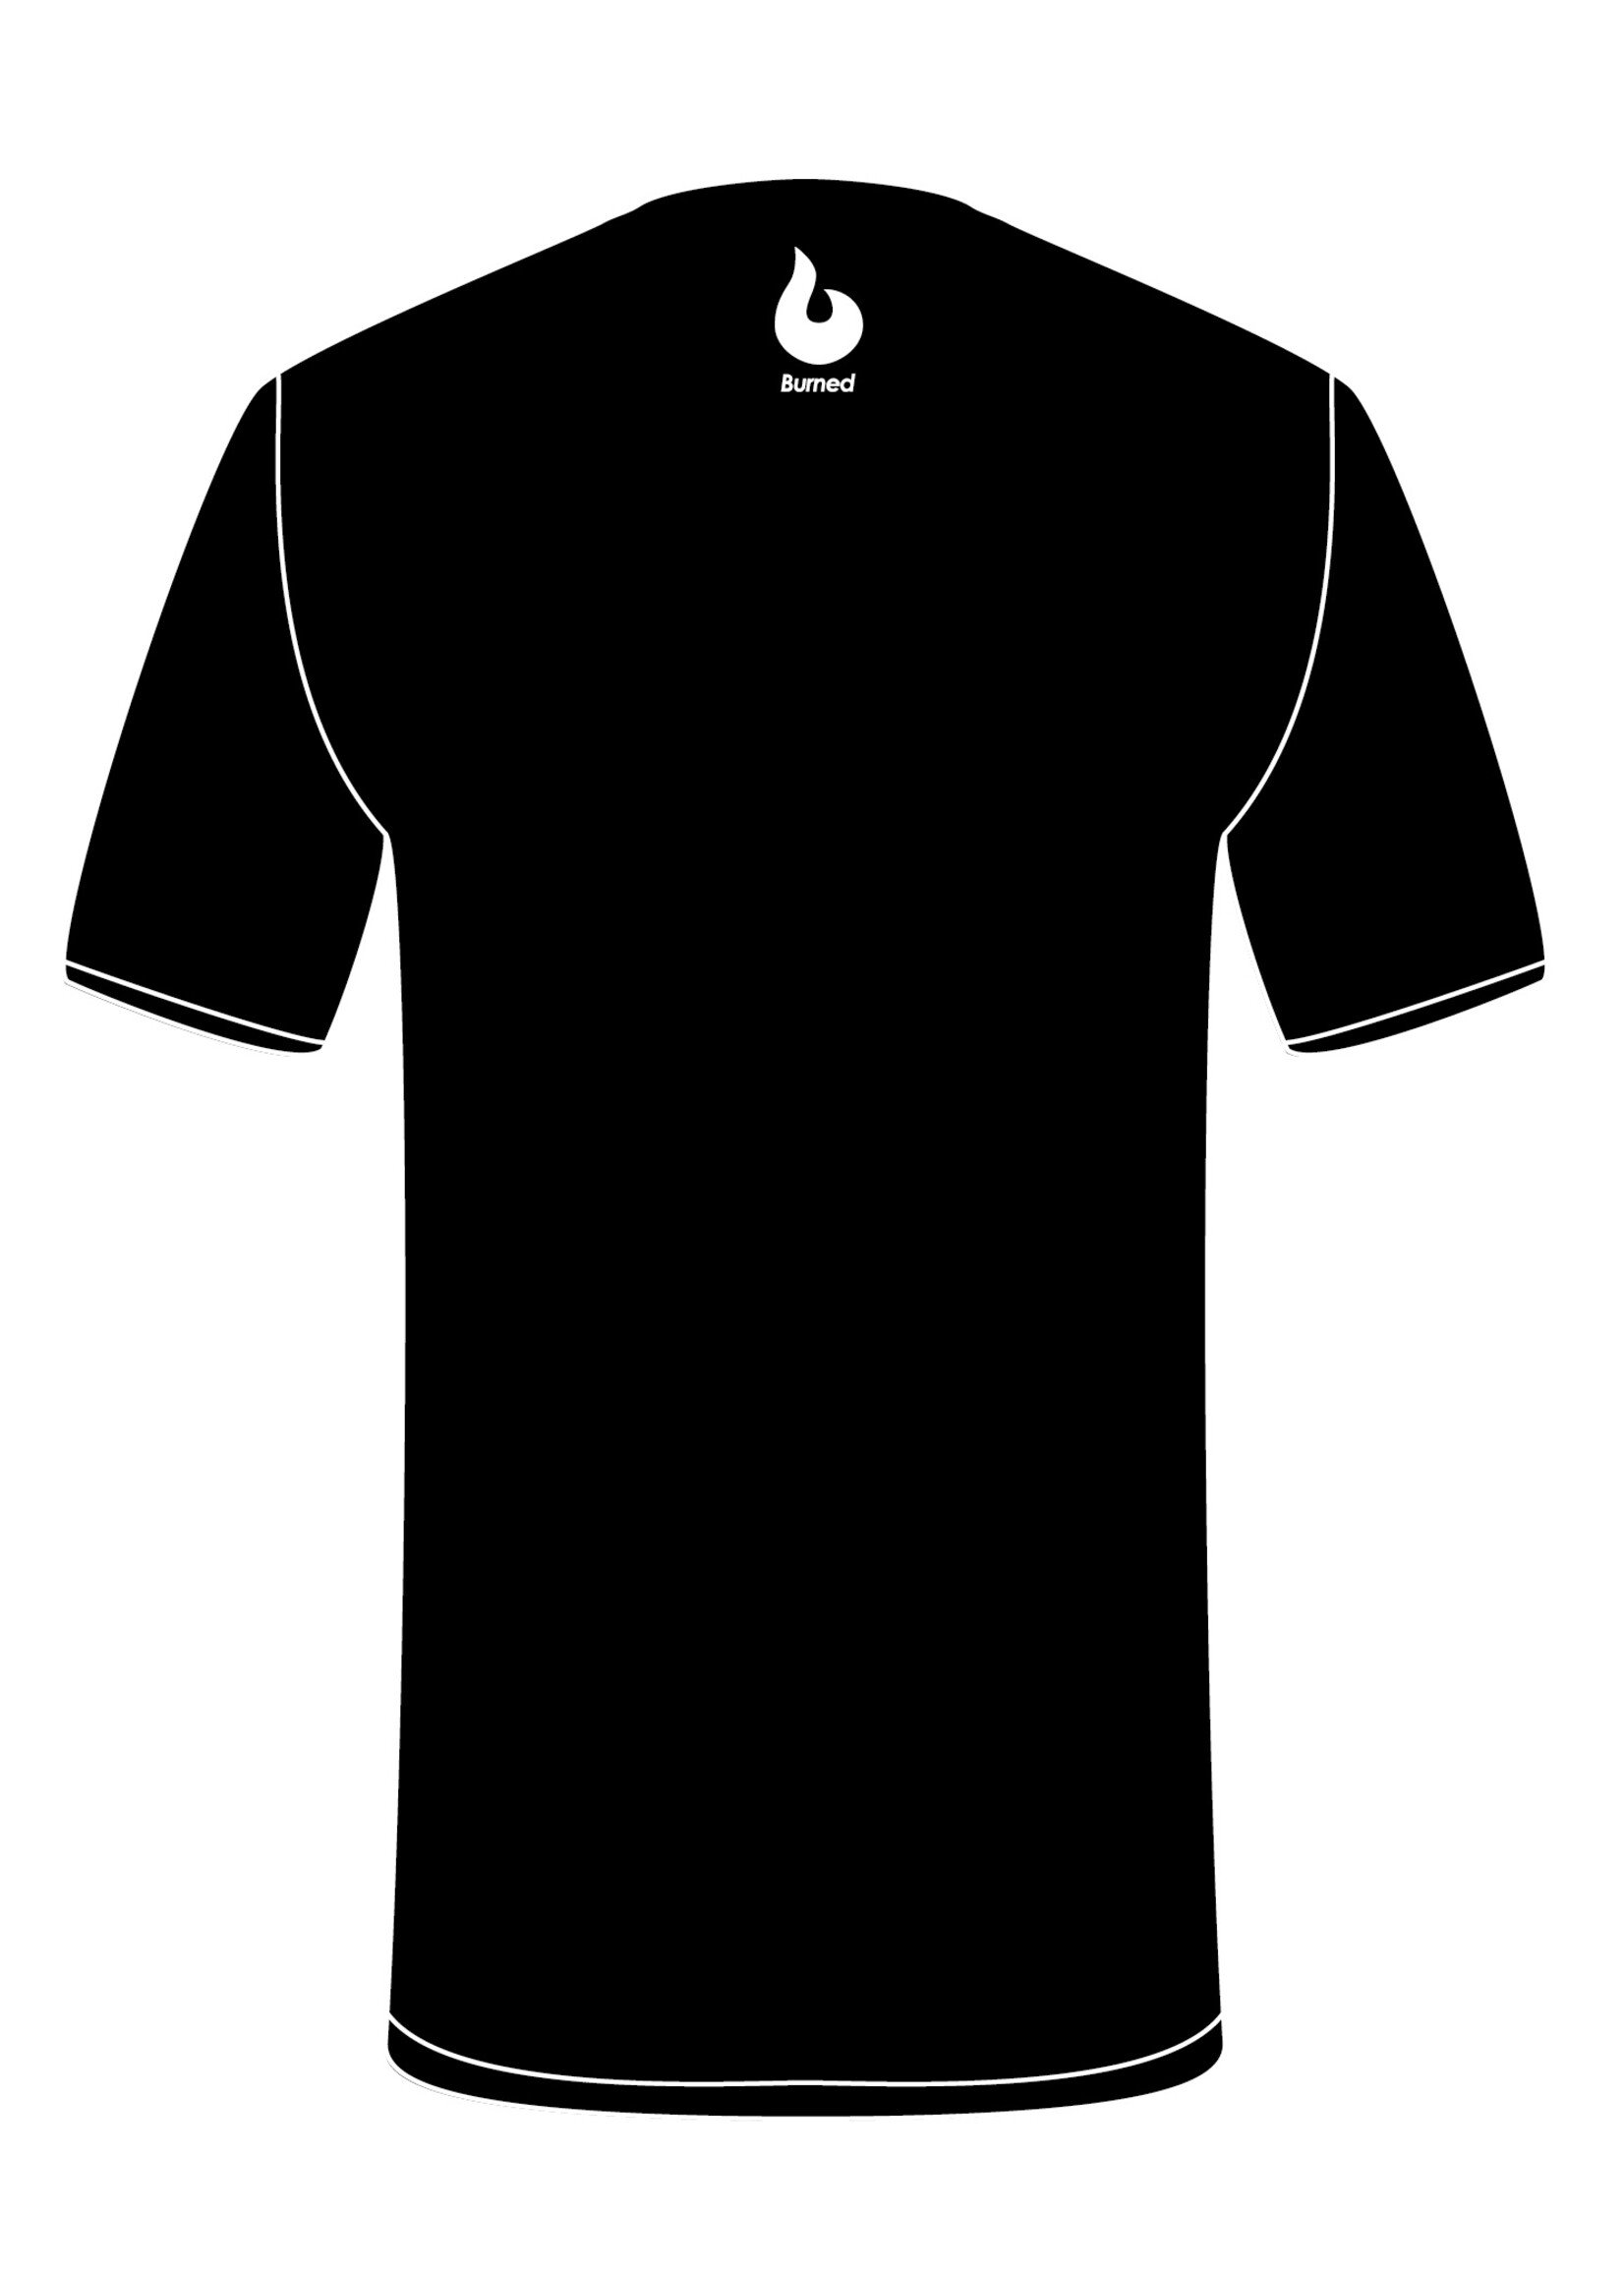 Burned Teamwear S.B.V. Juventus t-Shirt Tekst Zwart